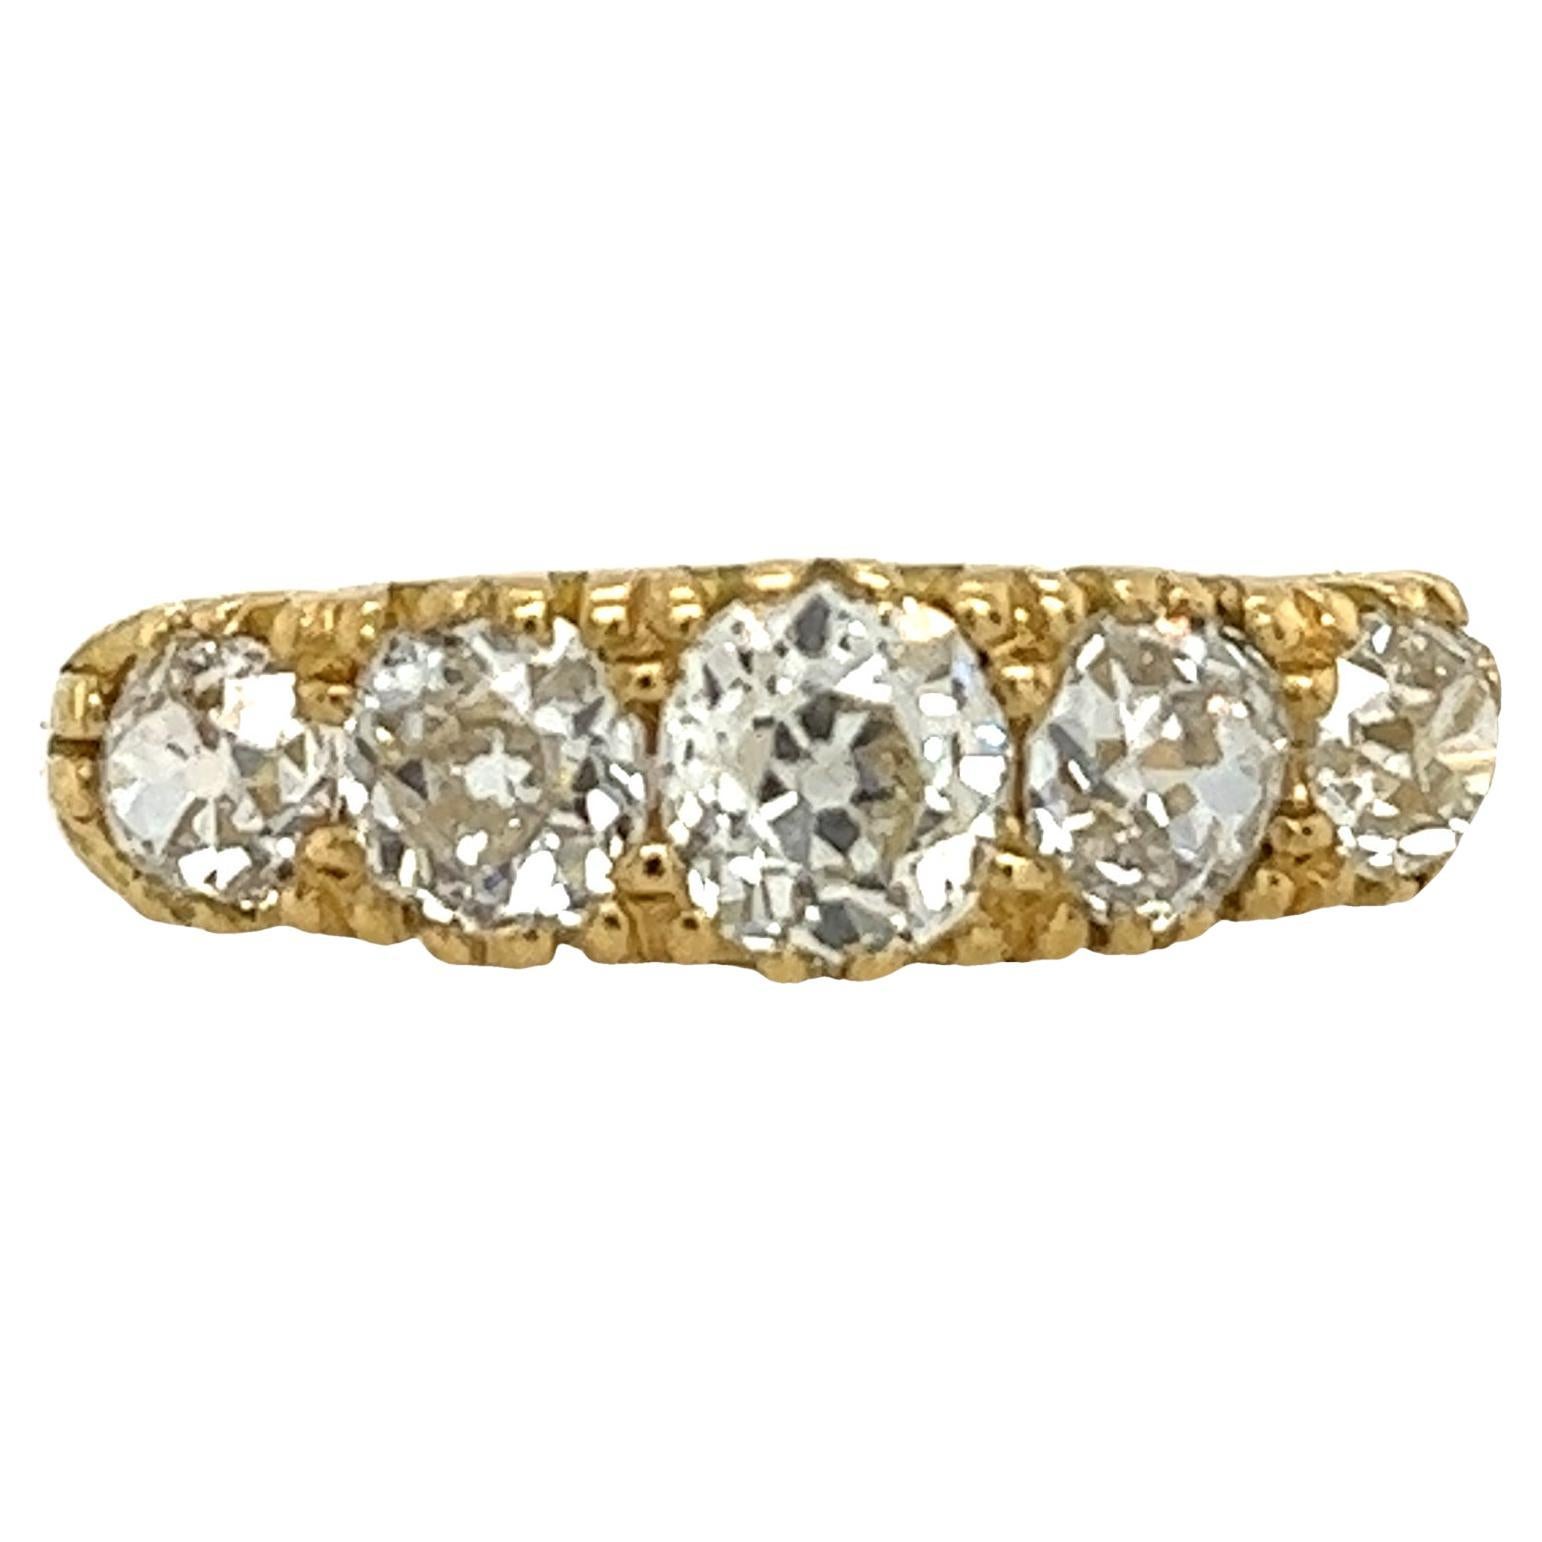 Vintage 18ct Yellow Gold Diamond 5 Stone Ring, 1.95ct Total Diamond Weight.